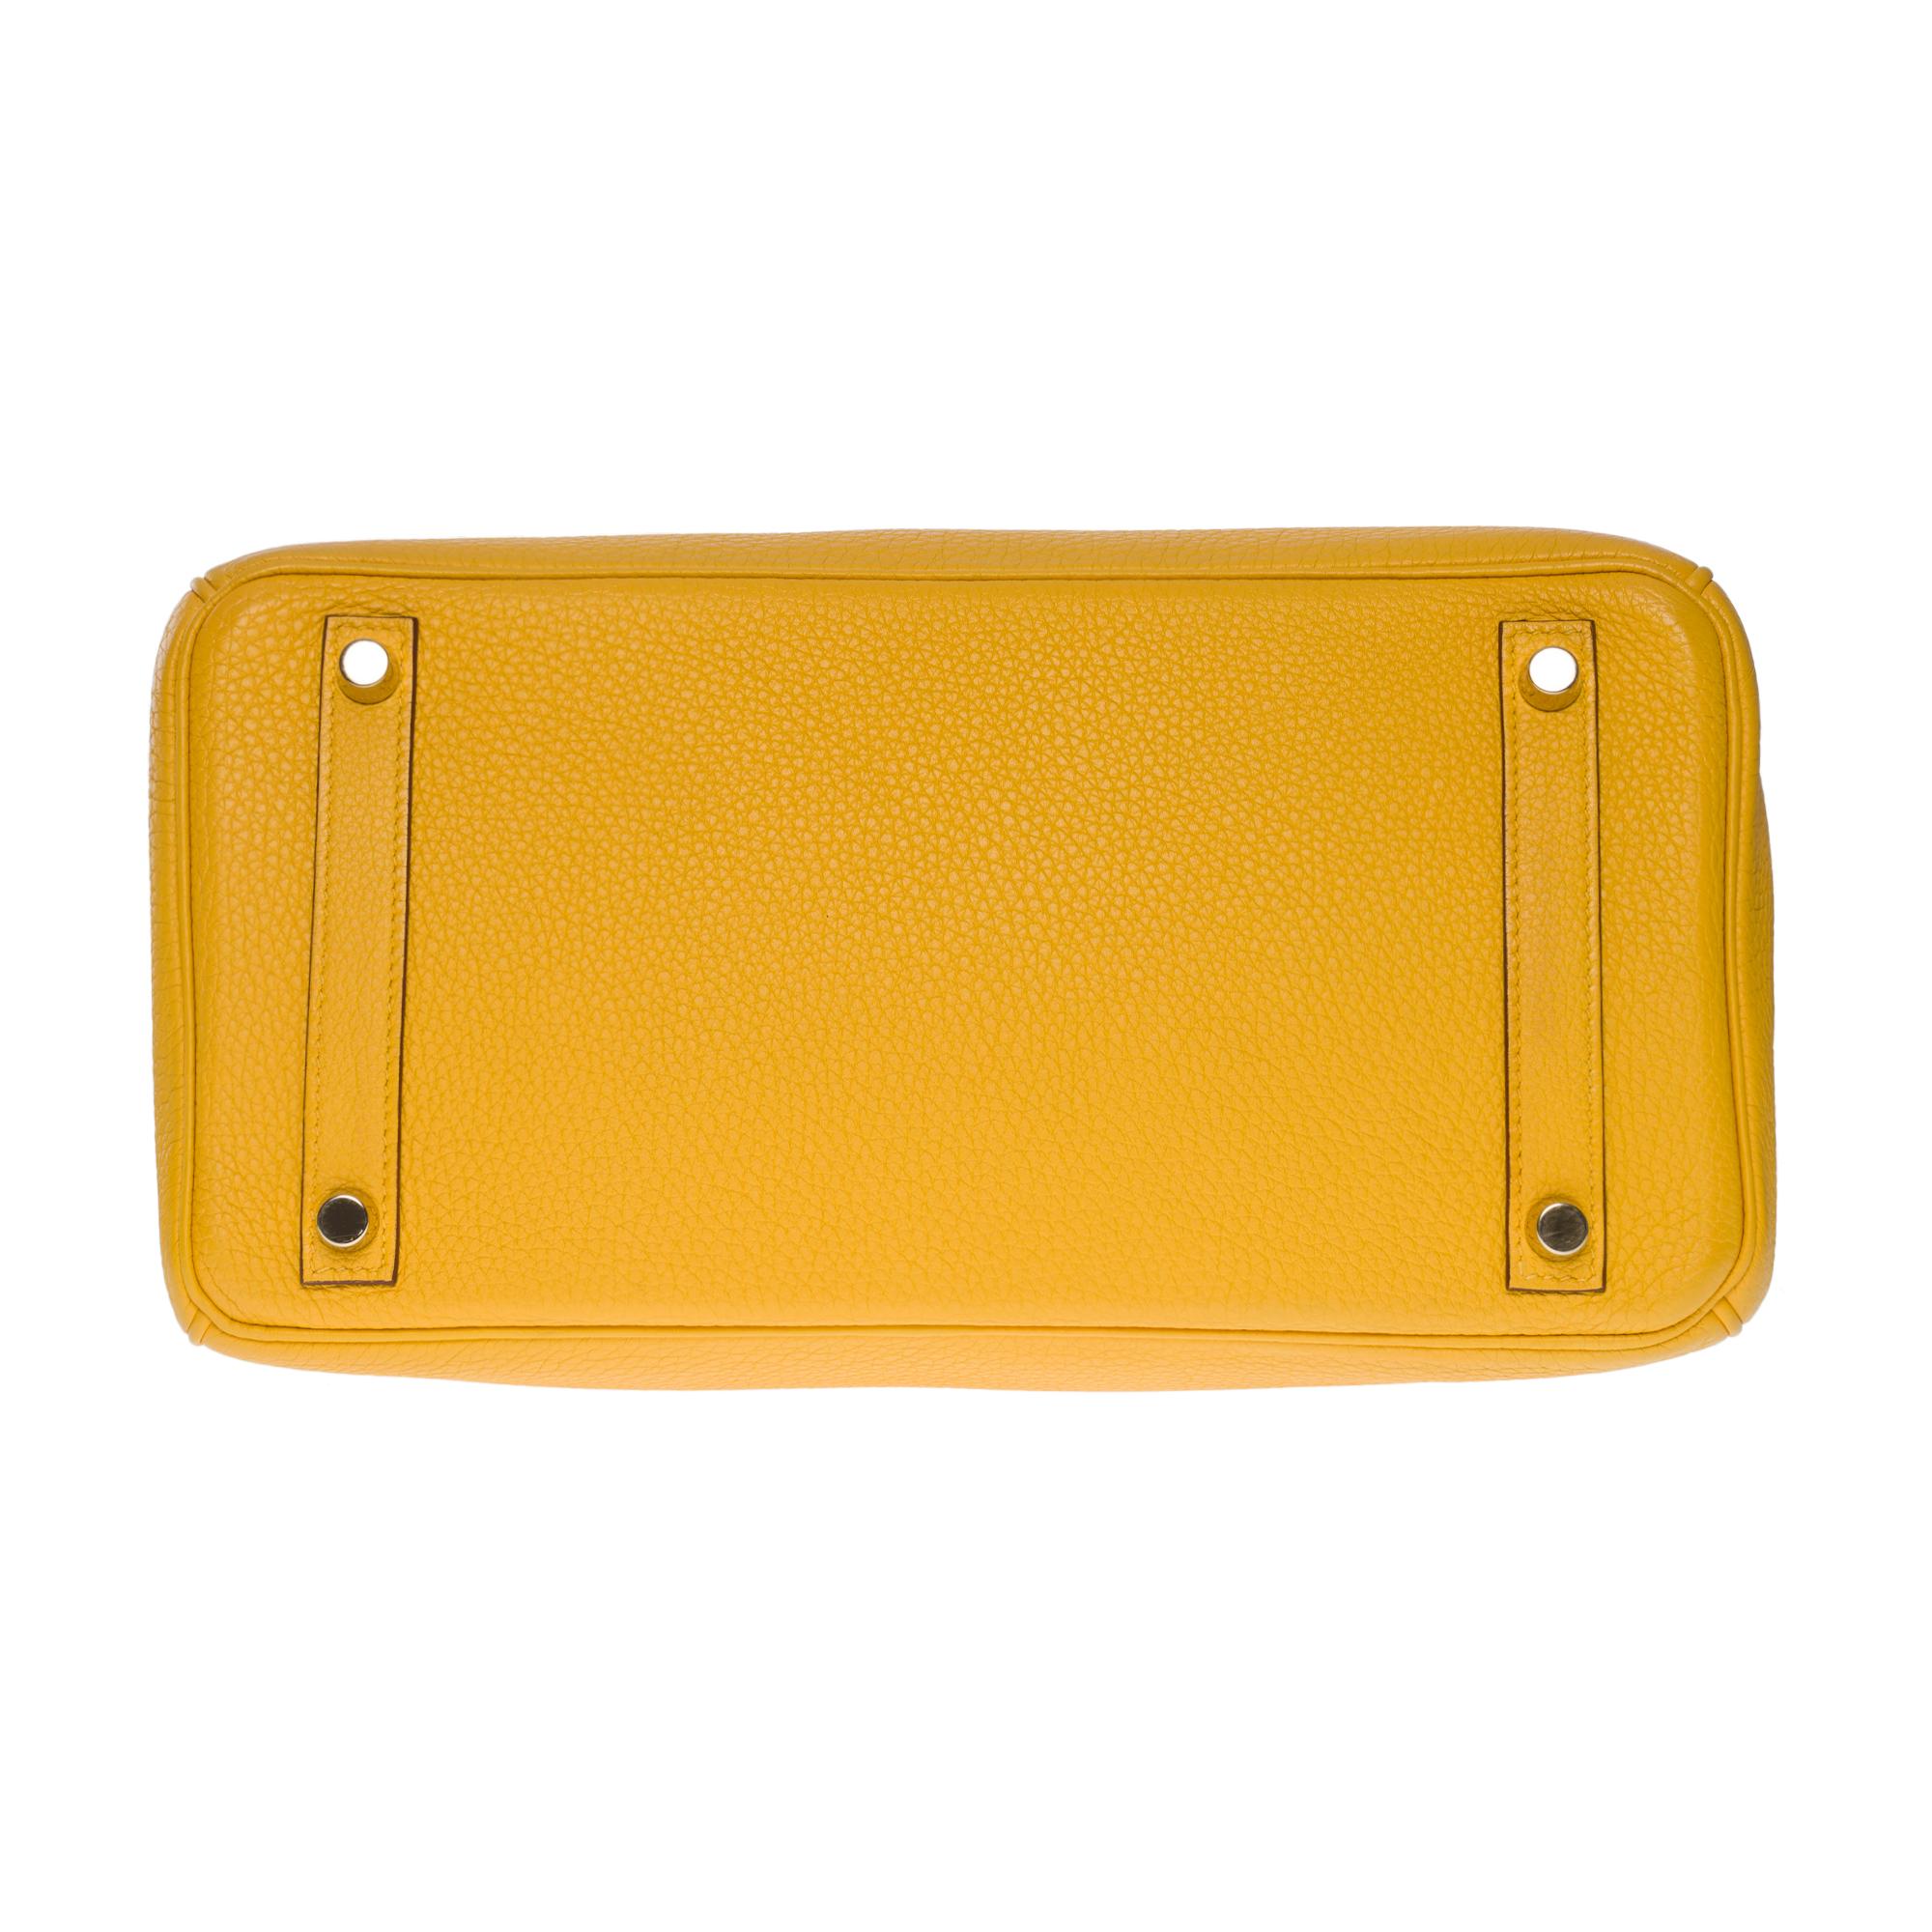 Amazing & Bright Hermès Birkin 30 handbag in Yellow Togo leather, GHW 6